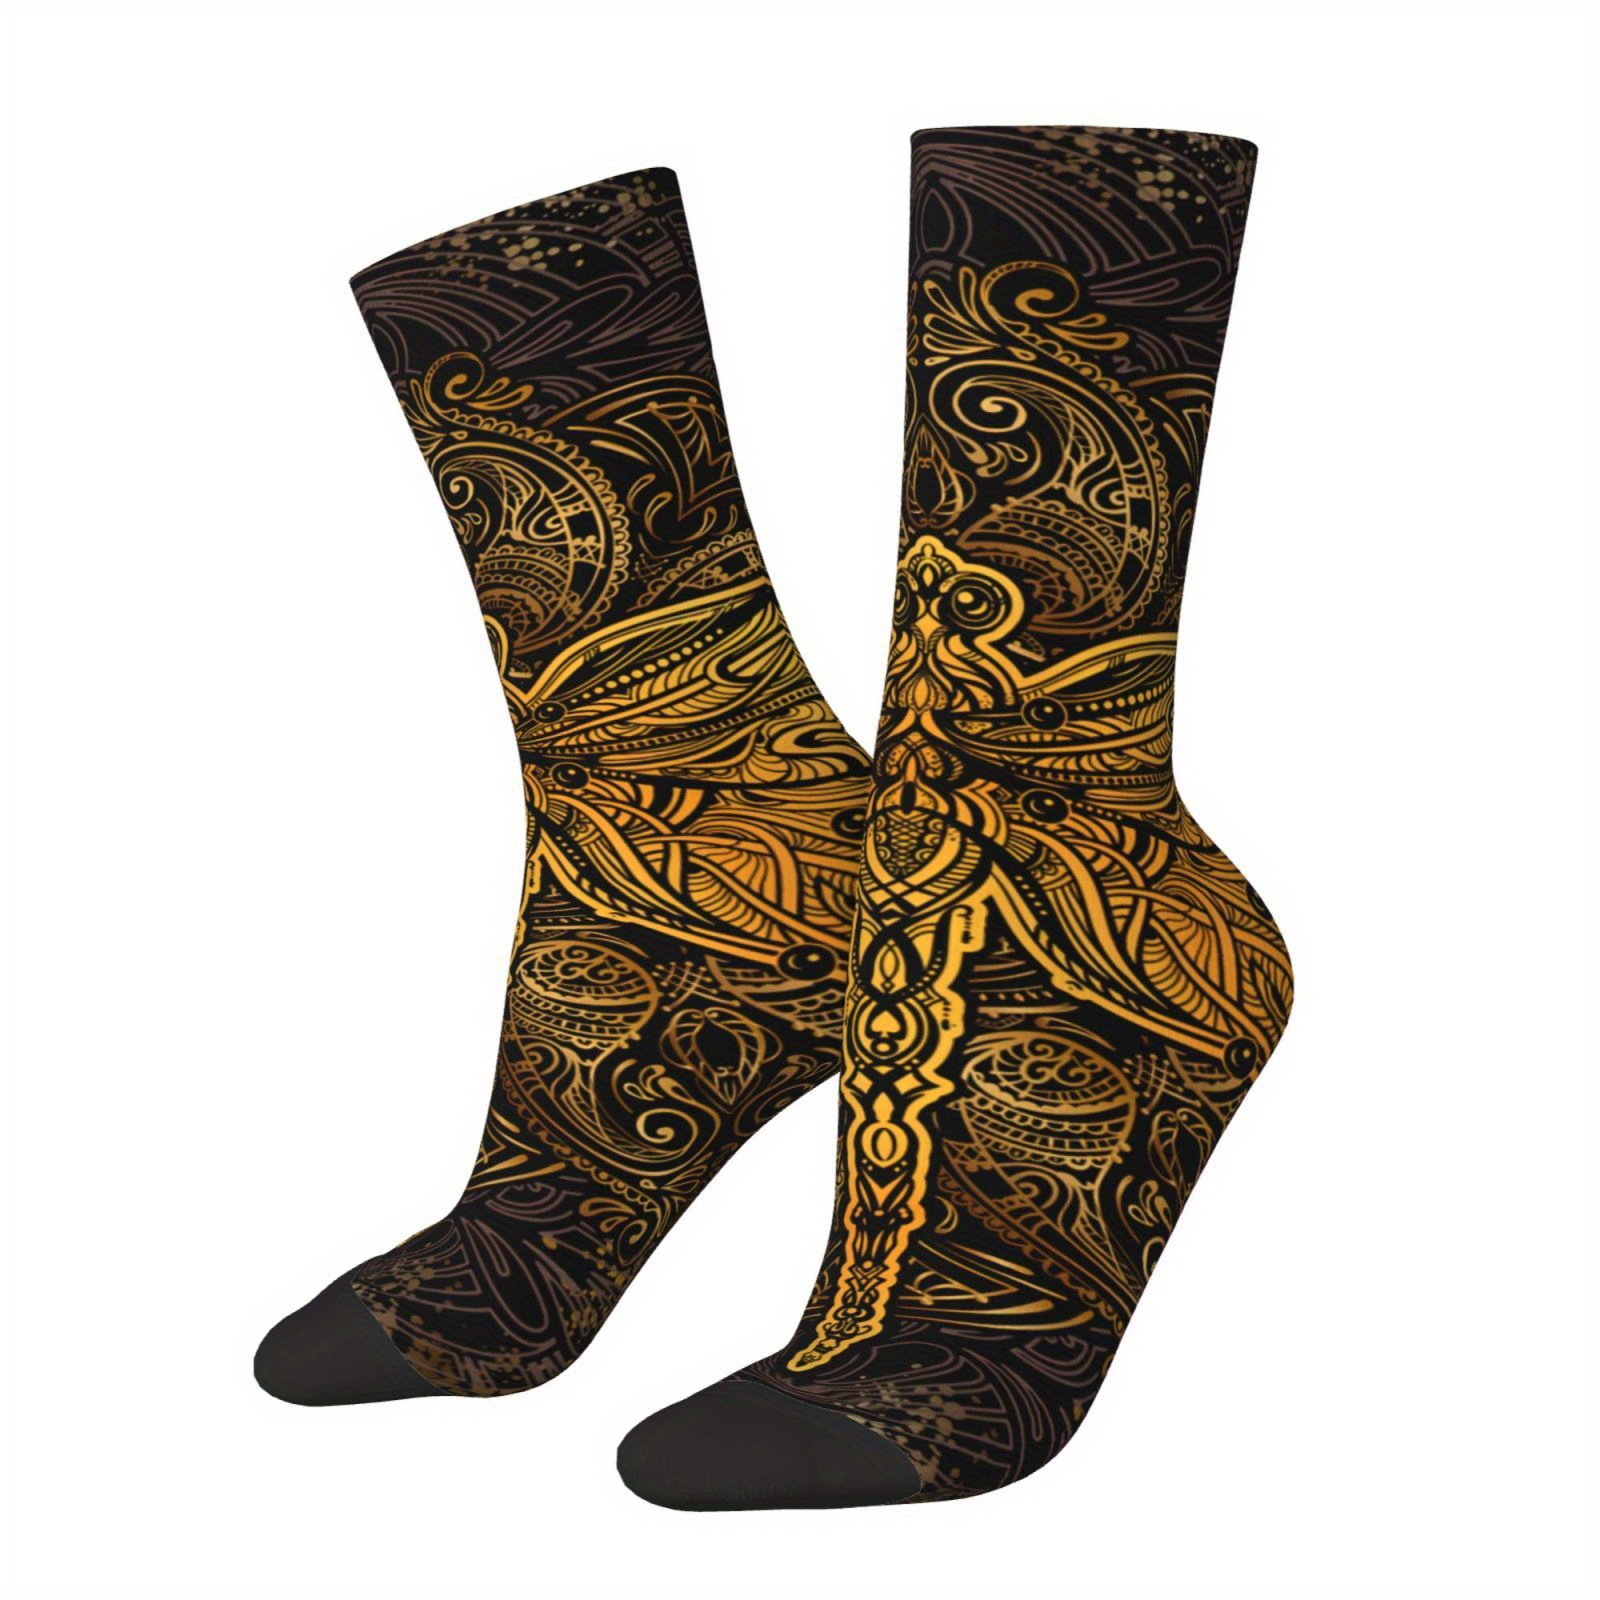 

1 Pair Of Unisex Harajuku Vintage Style Novelty Golden Totem Pattern Crew Socks, Trendy 3d Digital Printed Men Women Socks, Crazy Funny Socks For Gifts